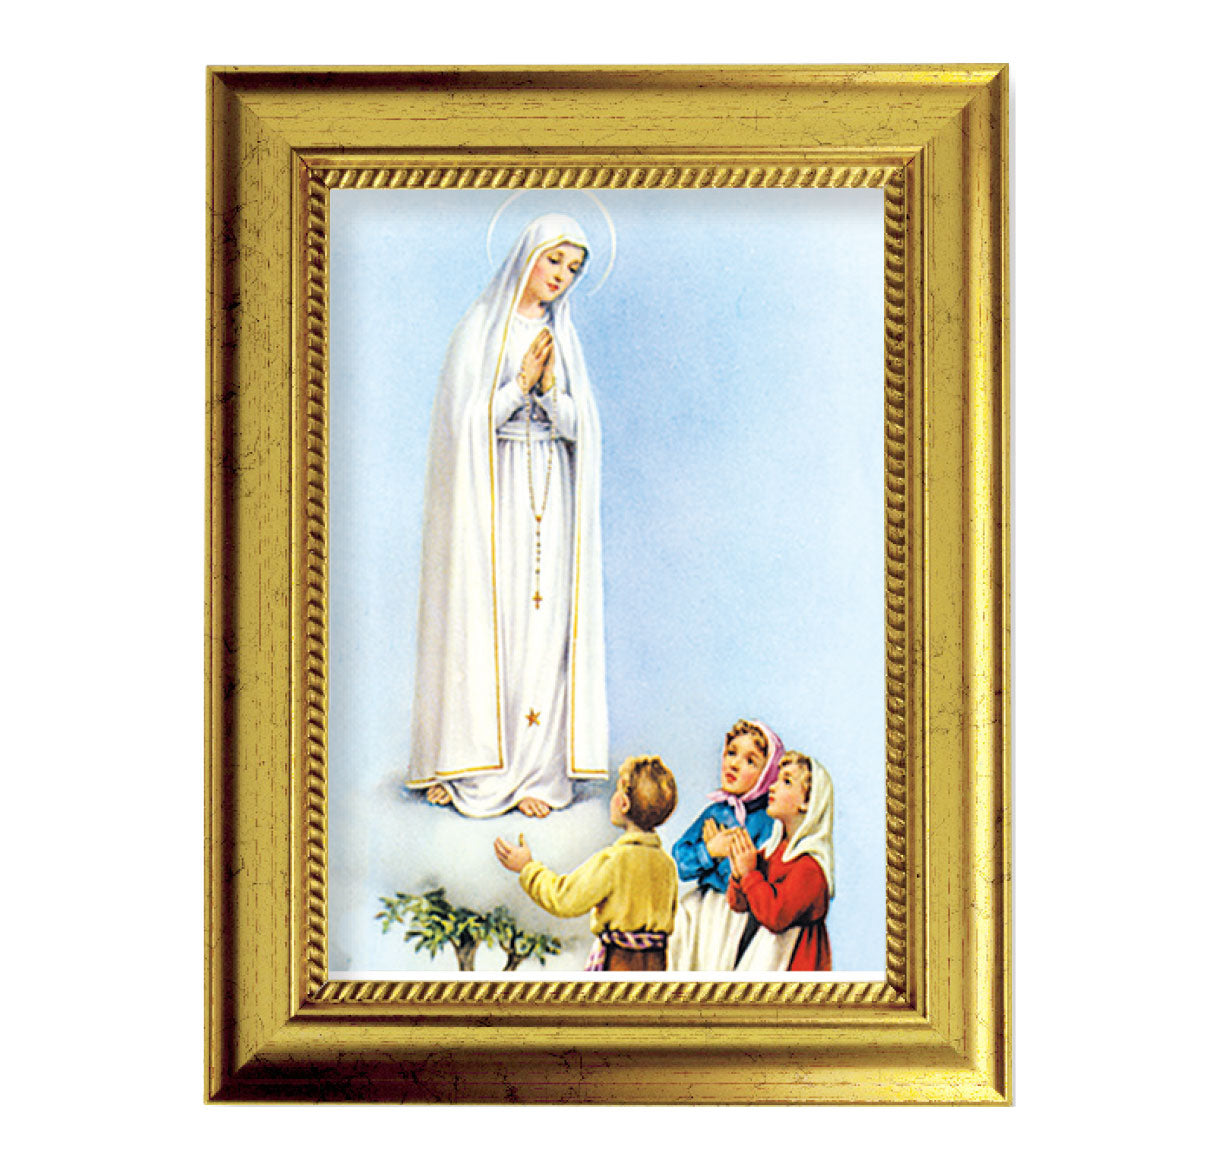 Our Lady of Fatima Gold-Leaf Framed Art